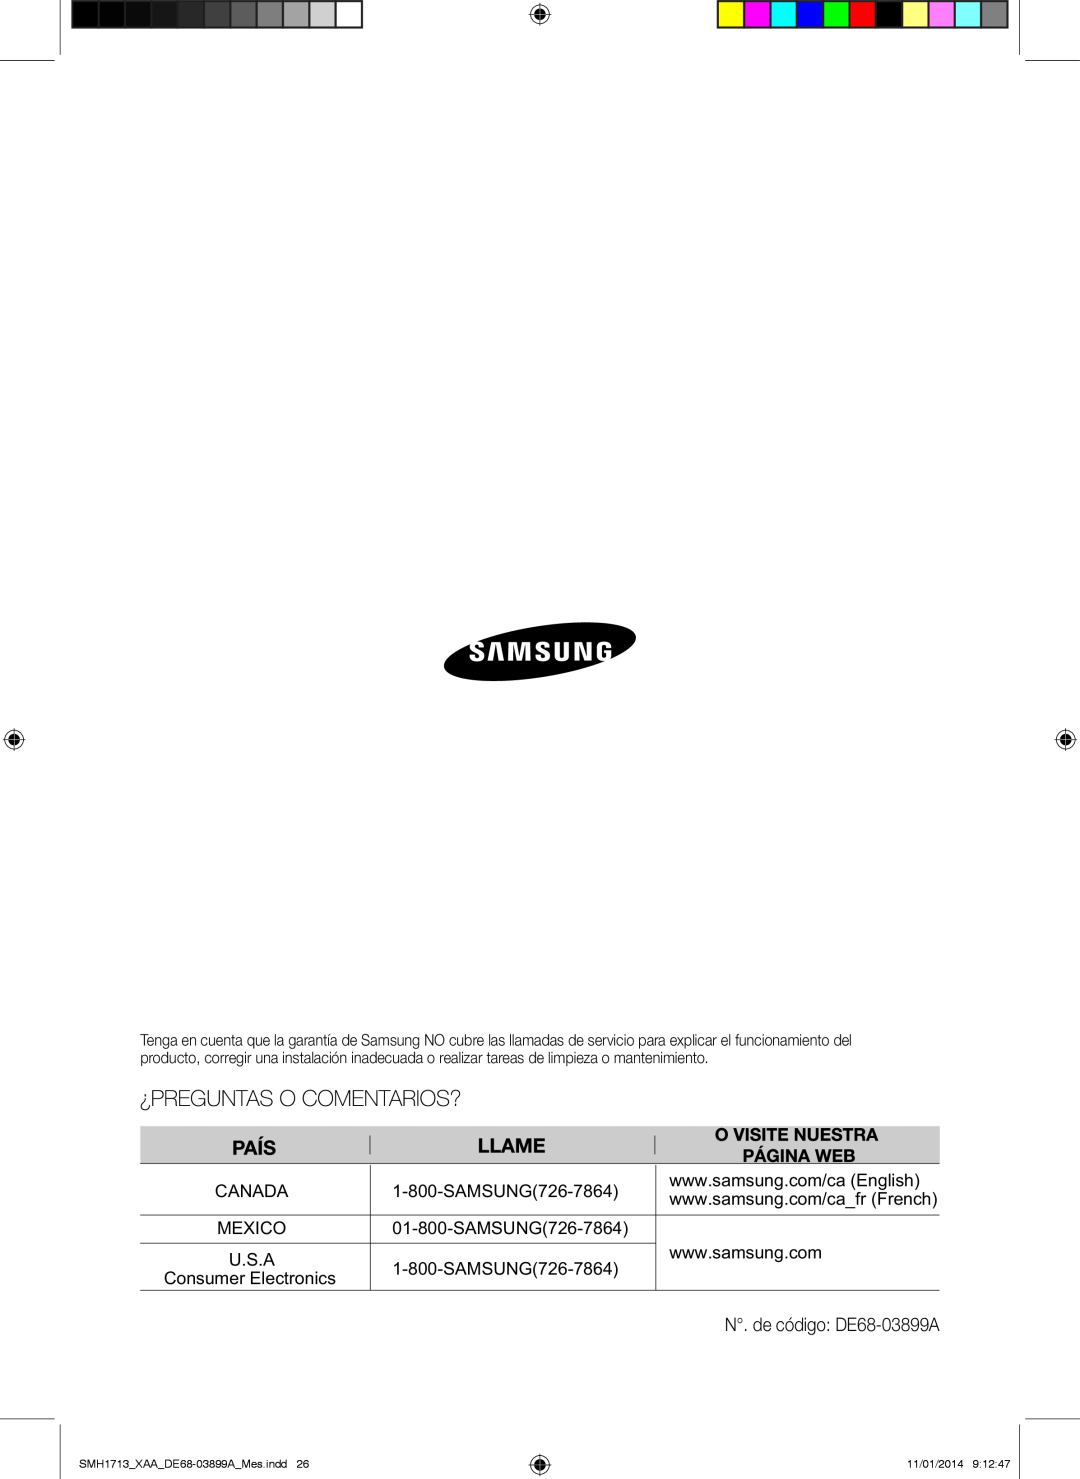 Samsung user manual Canada, SAMSUNG726-7864, Mexico, U.S.A, SMH1713XAADE68-03899AMes.indd, 11/01/2014 